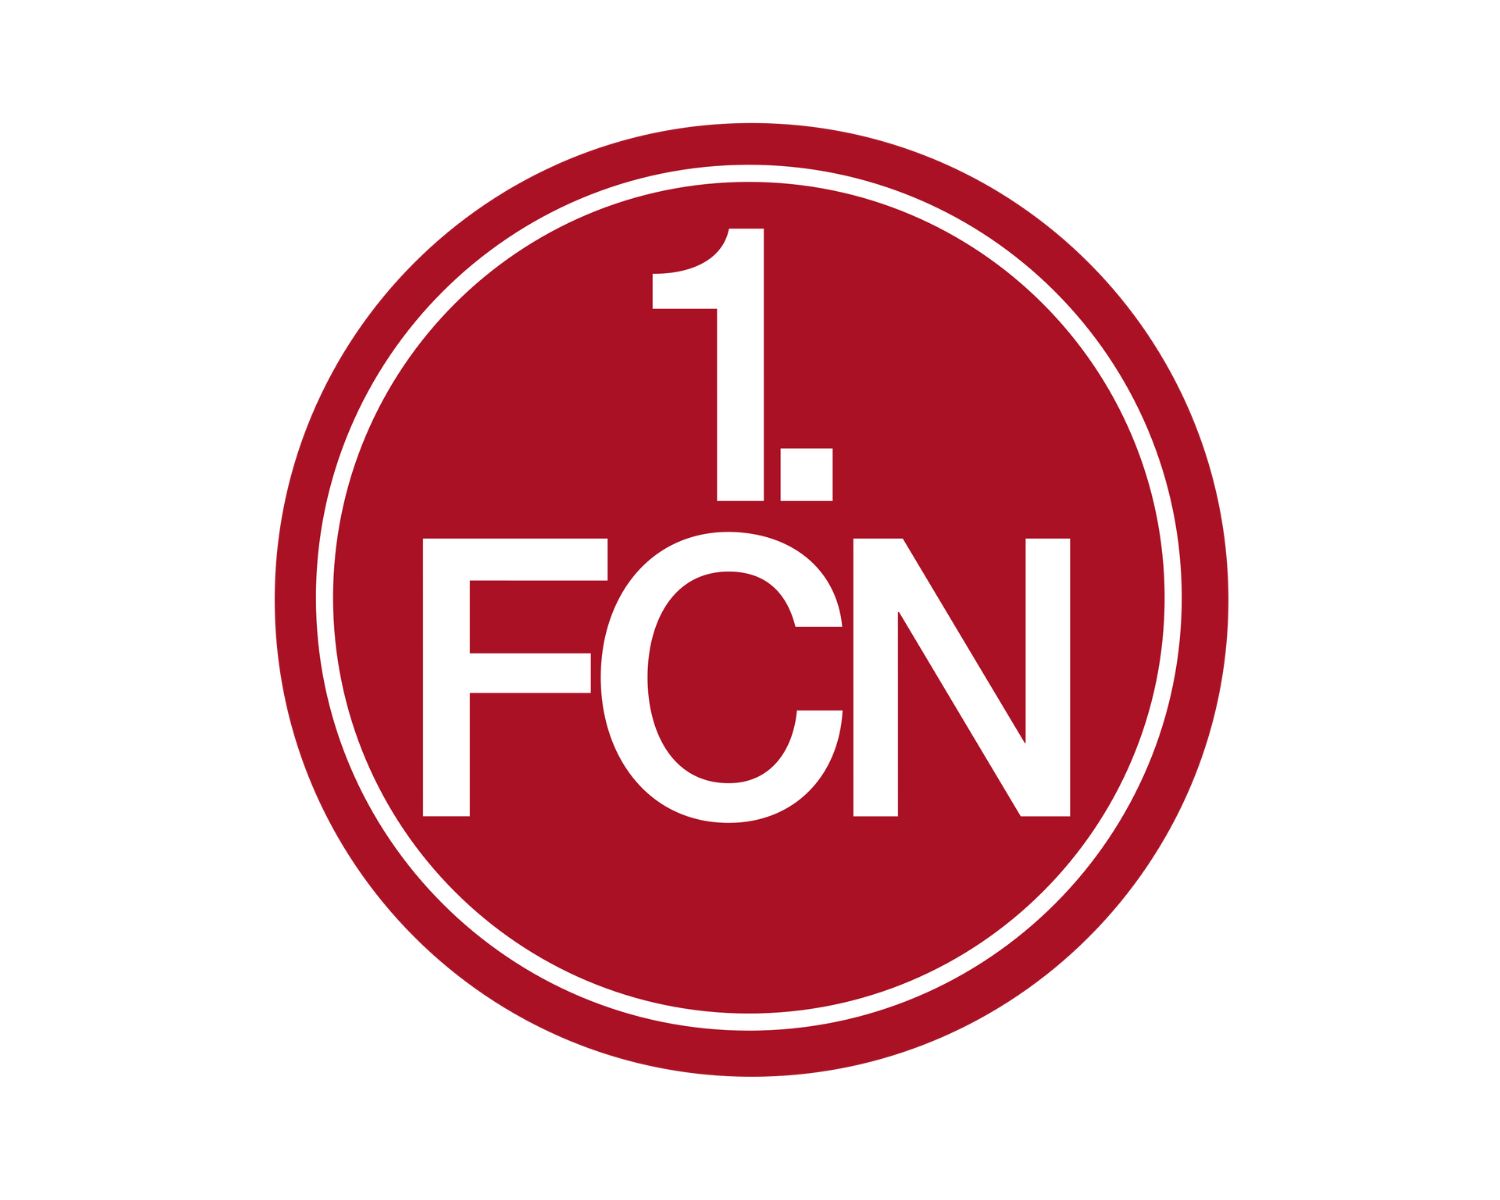 fc-nurnberg-24-football-club-facts